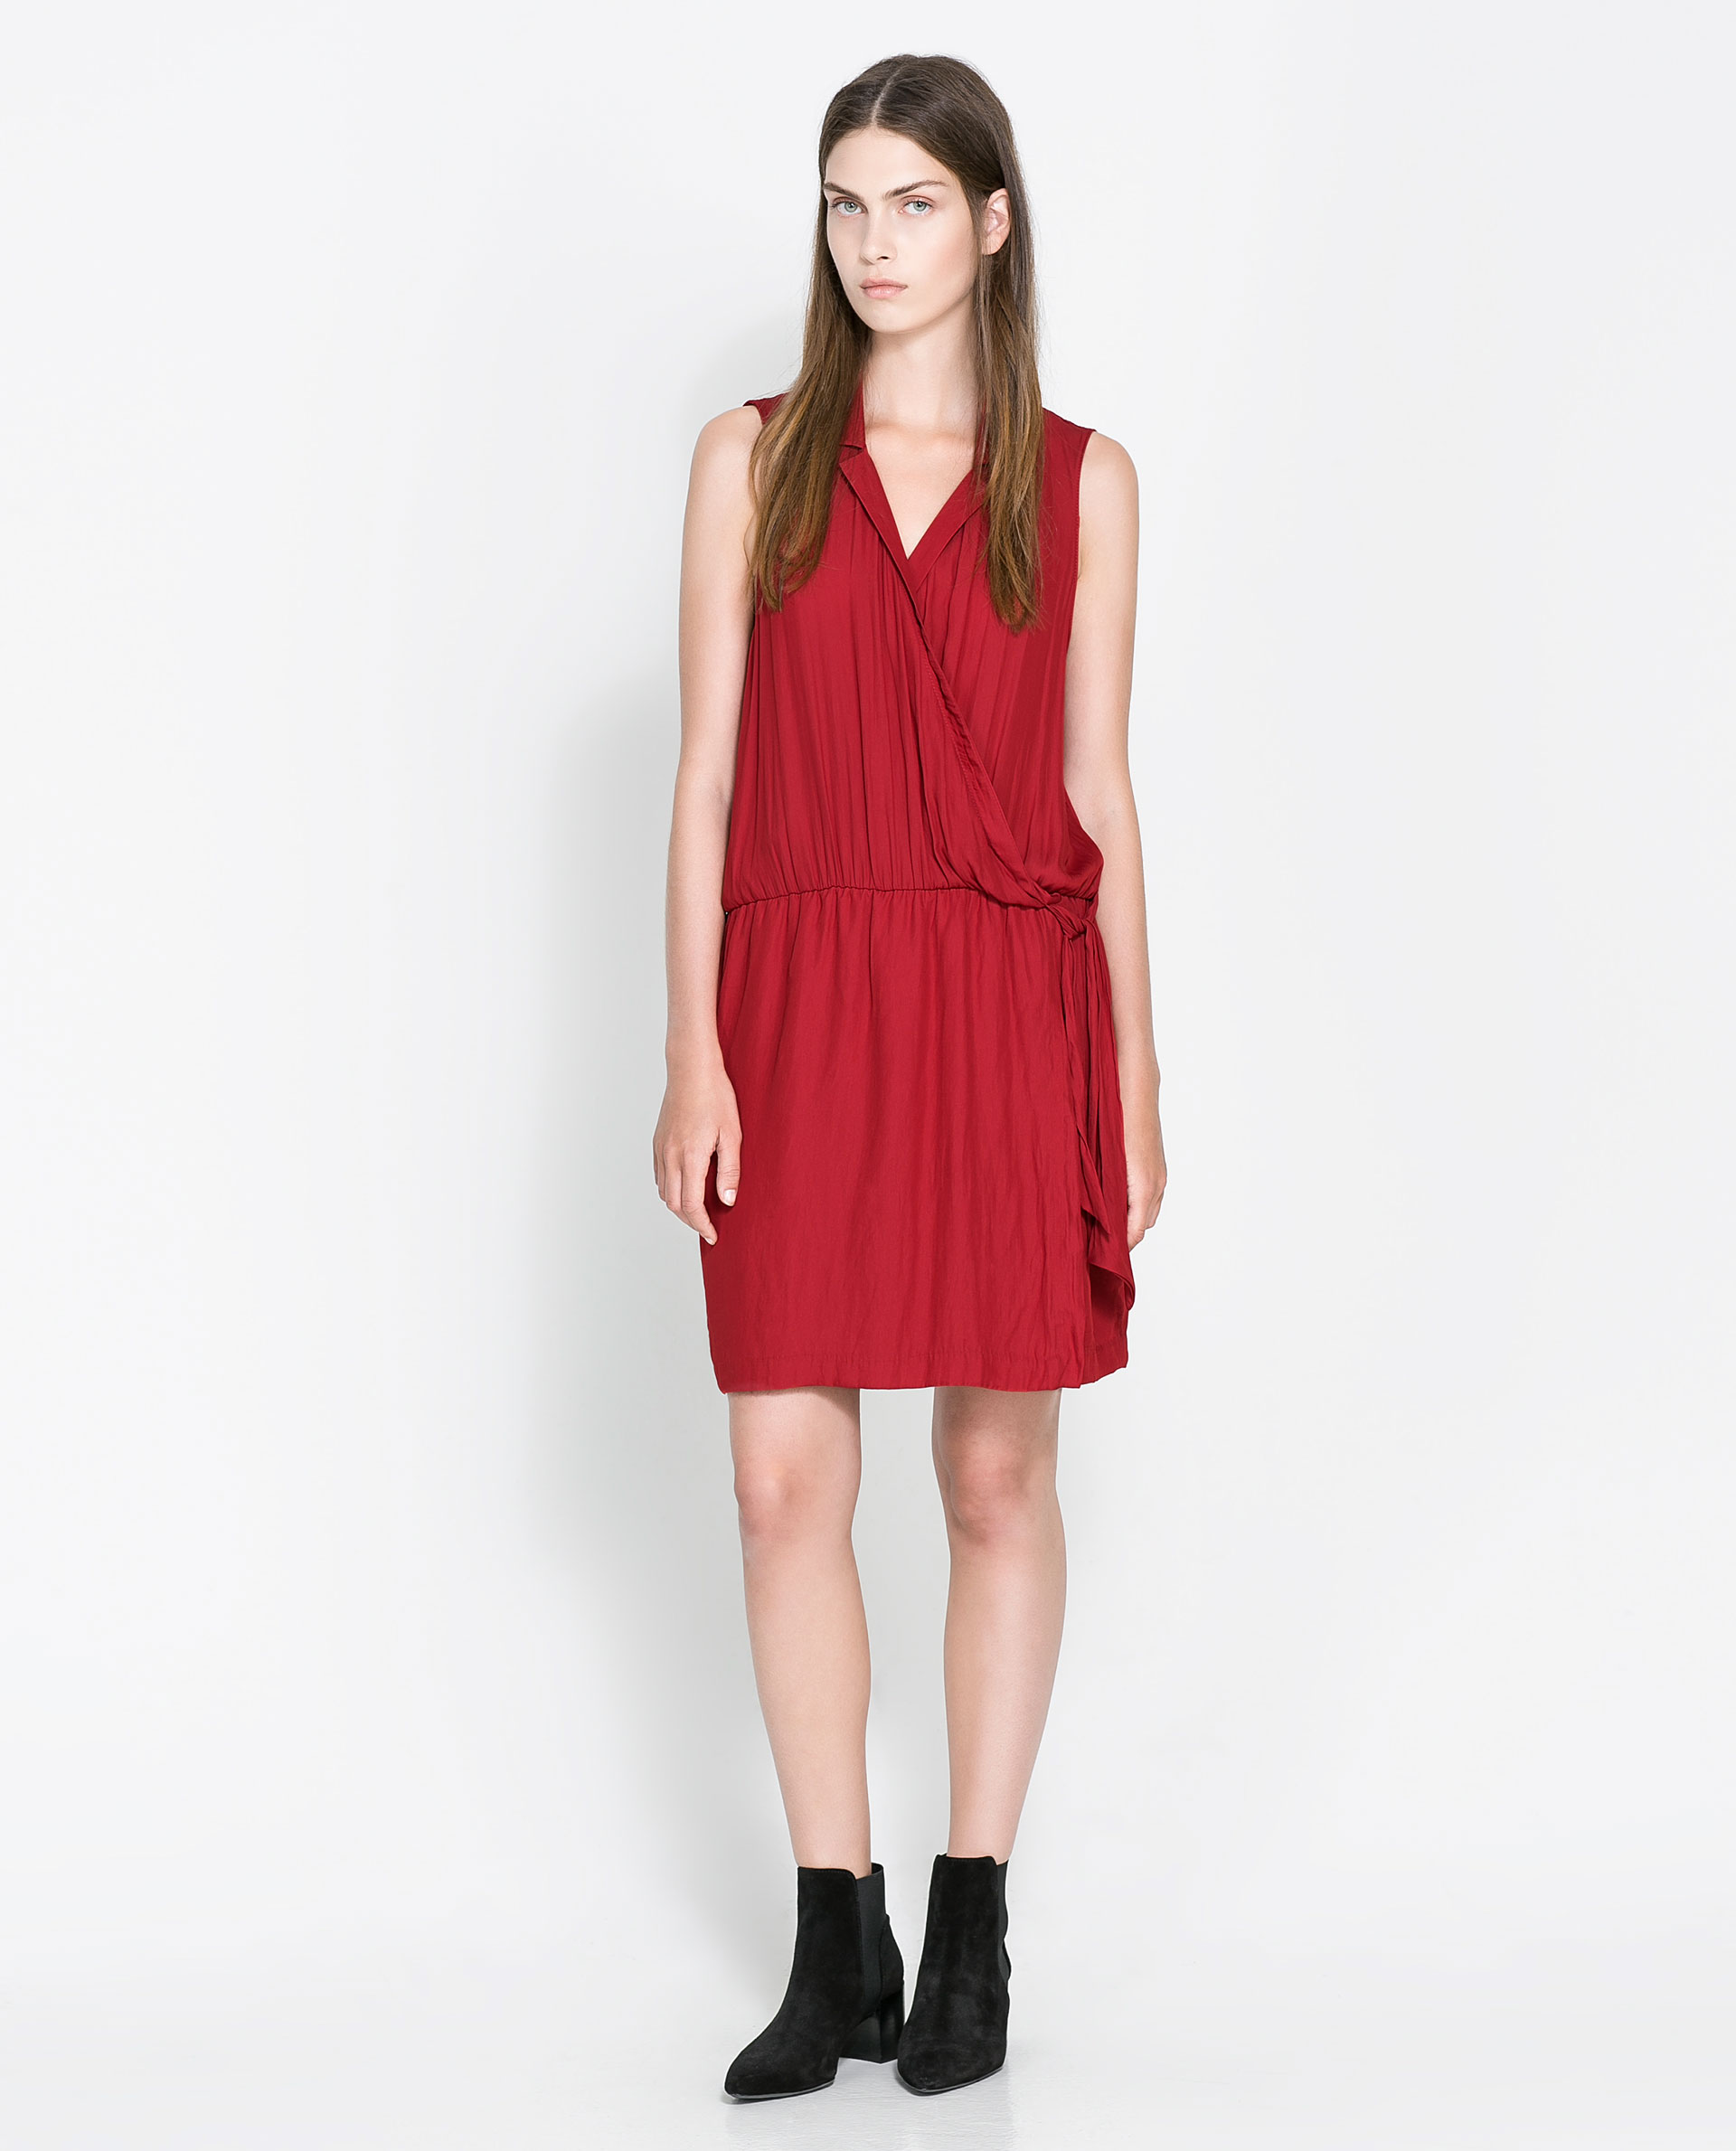 Zara Sleeveless Crossover Dress in Red (Cherry red) | Lyst